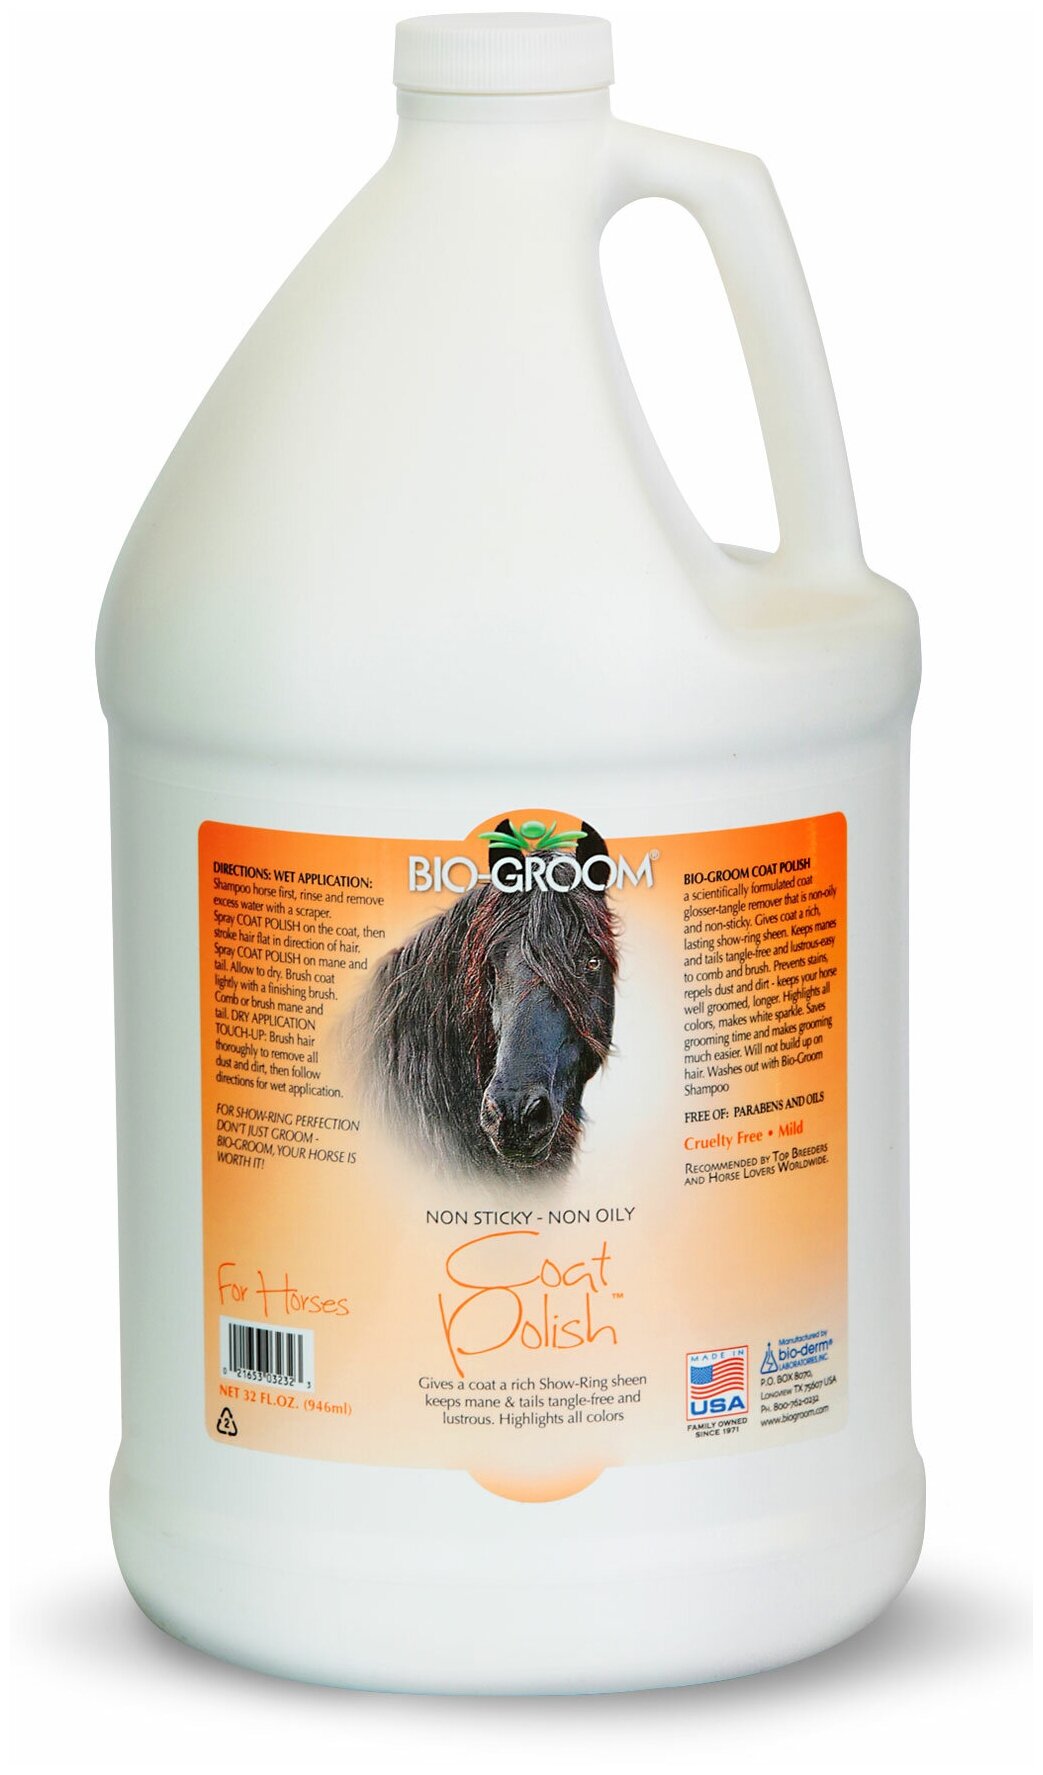 Bio-Groom Спрей-блеск антиколтун для лошадей, Bio-Groom Coat Polish Horse, 3.8л